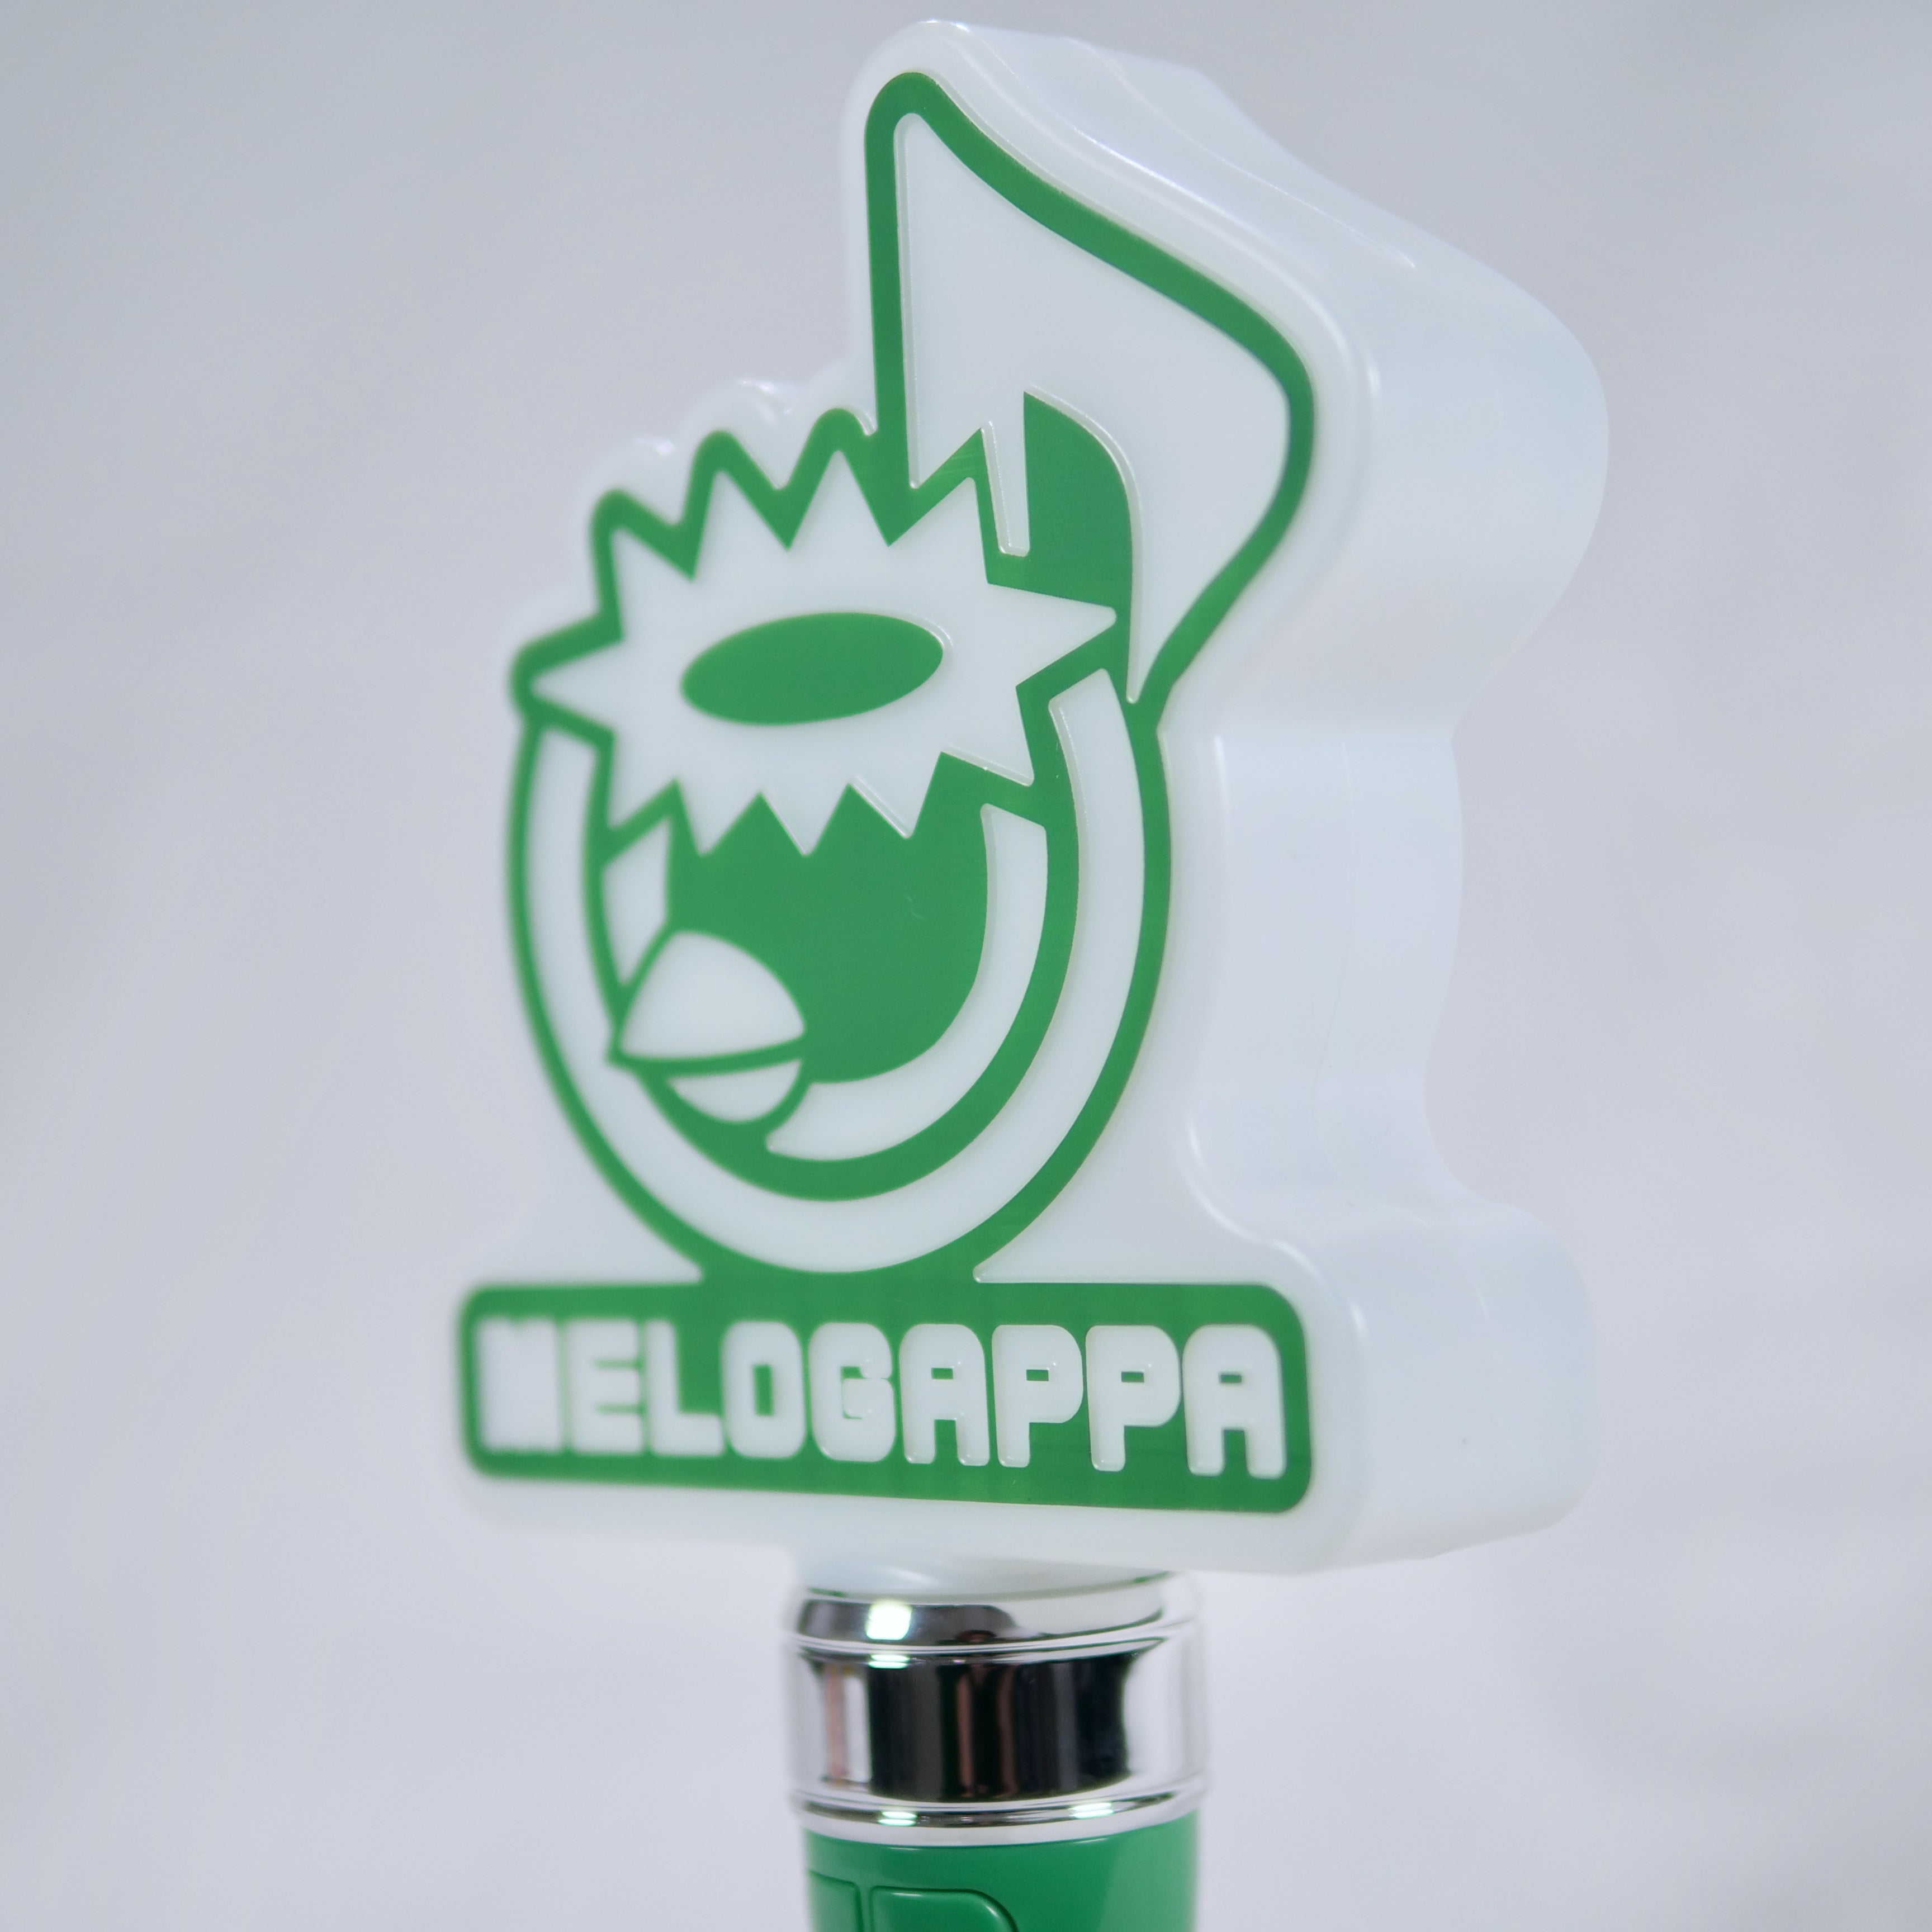 MELOGAPPA公式ペンライト3D（14色仕様）